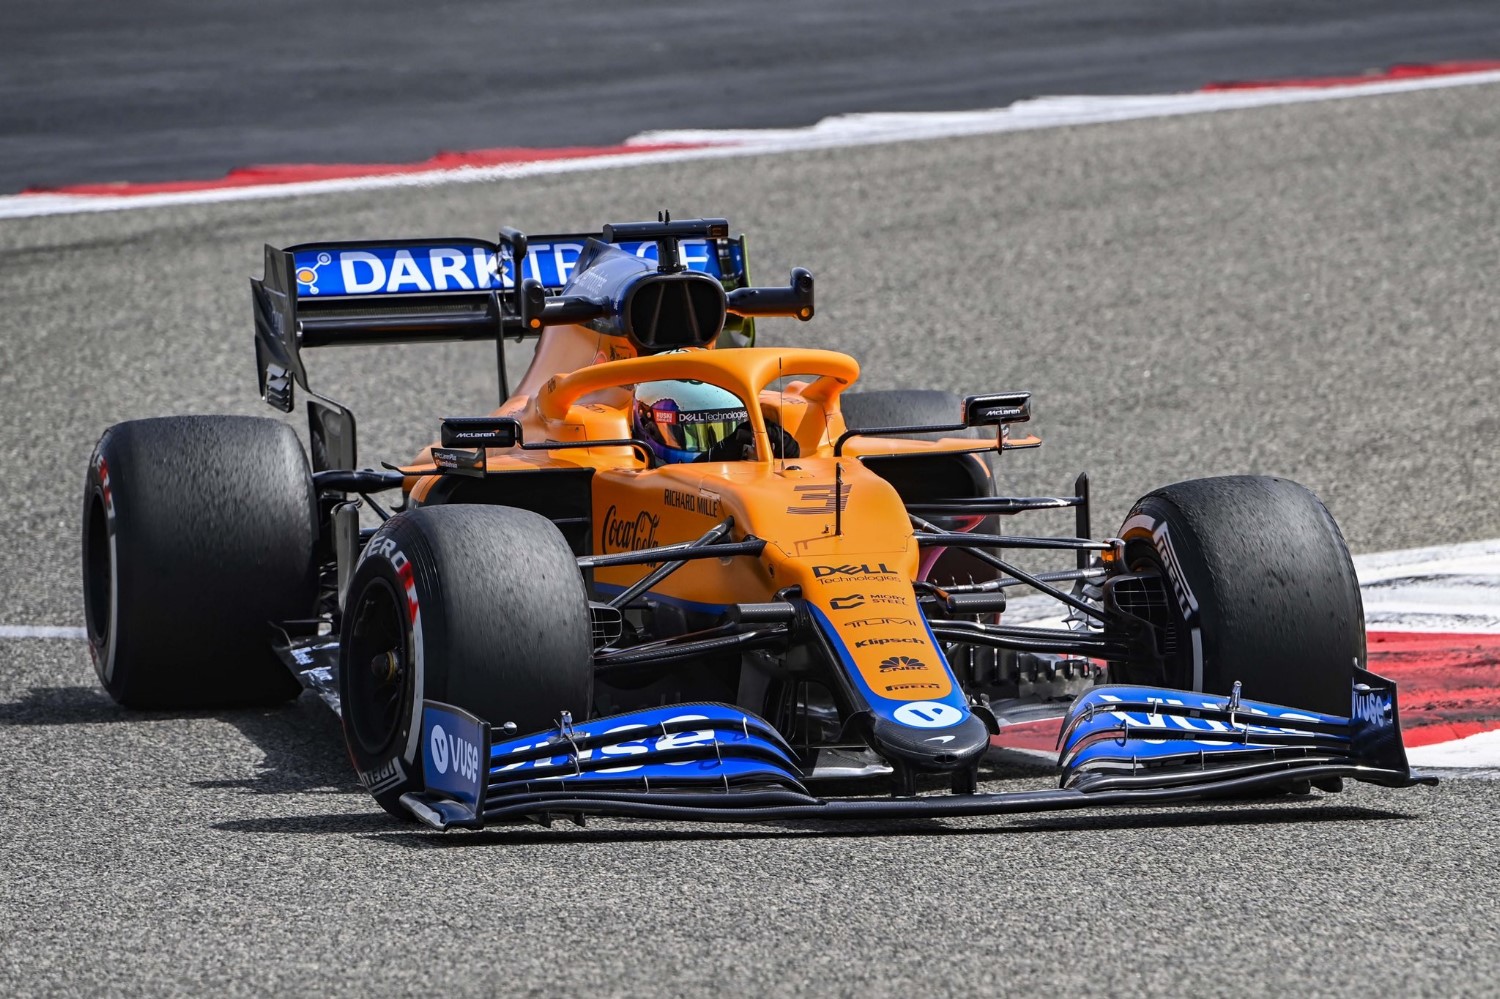 2021 McLaren F1 car 'pretty impressive' so far - Leclerc ...